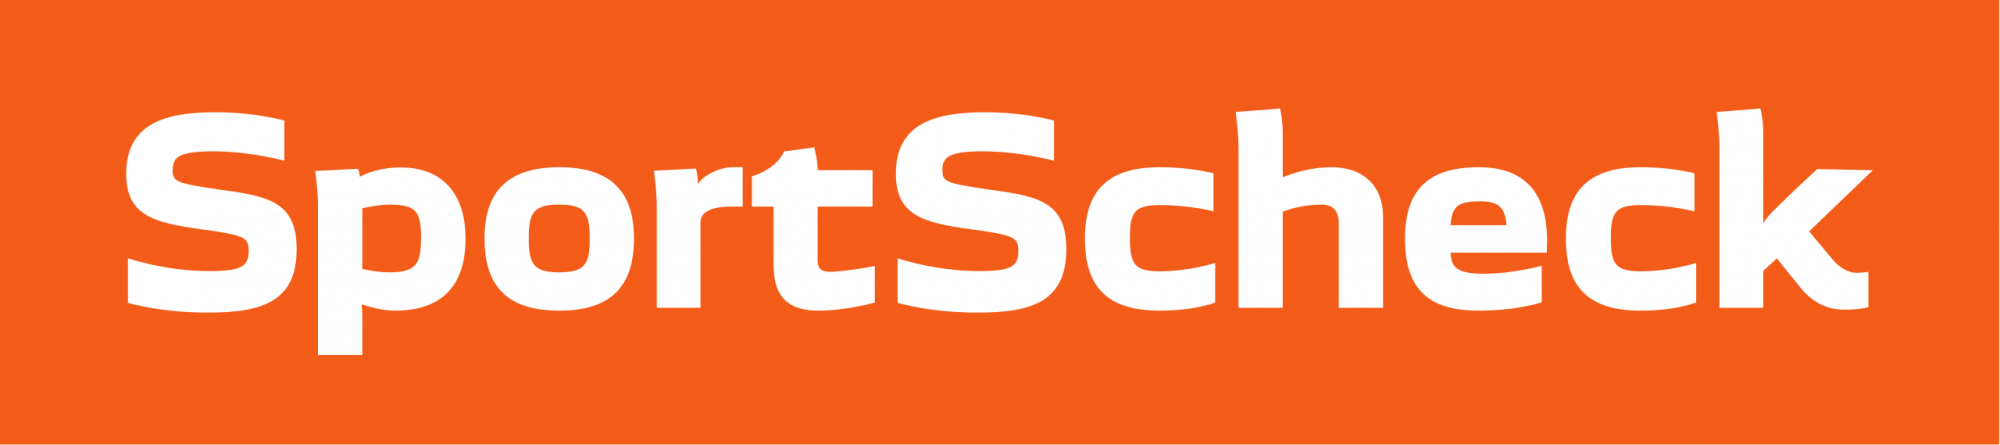 Sport-scheck-logo.svg.png